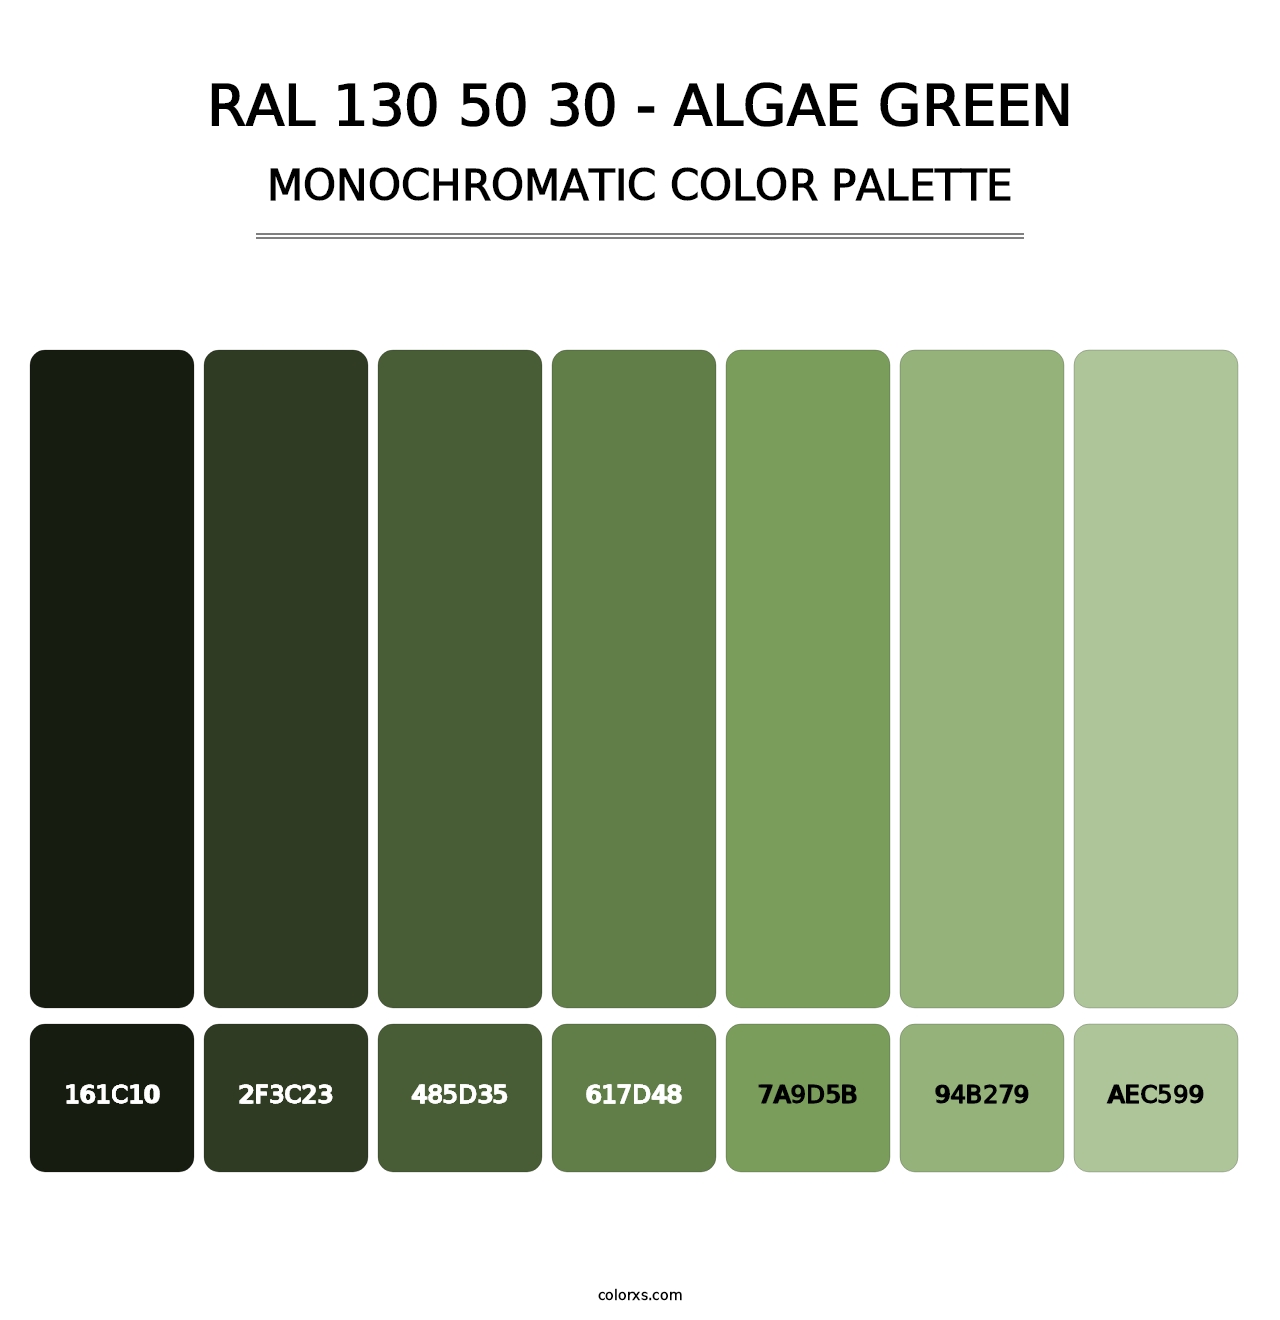 RAL 130 50 30 - Algae Green - Monochromatic Color Palette